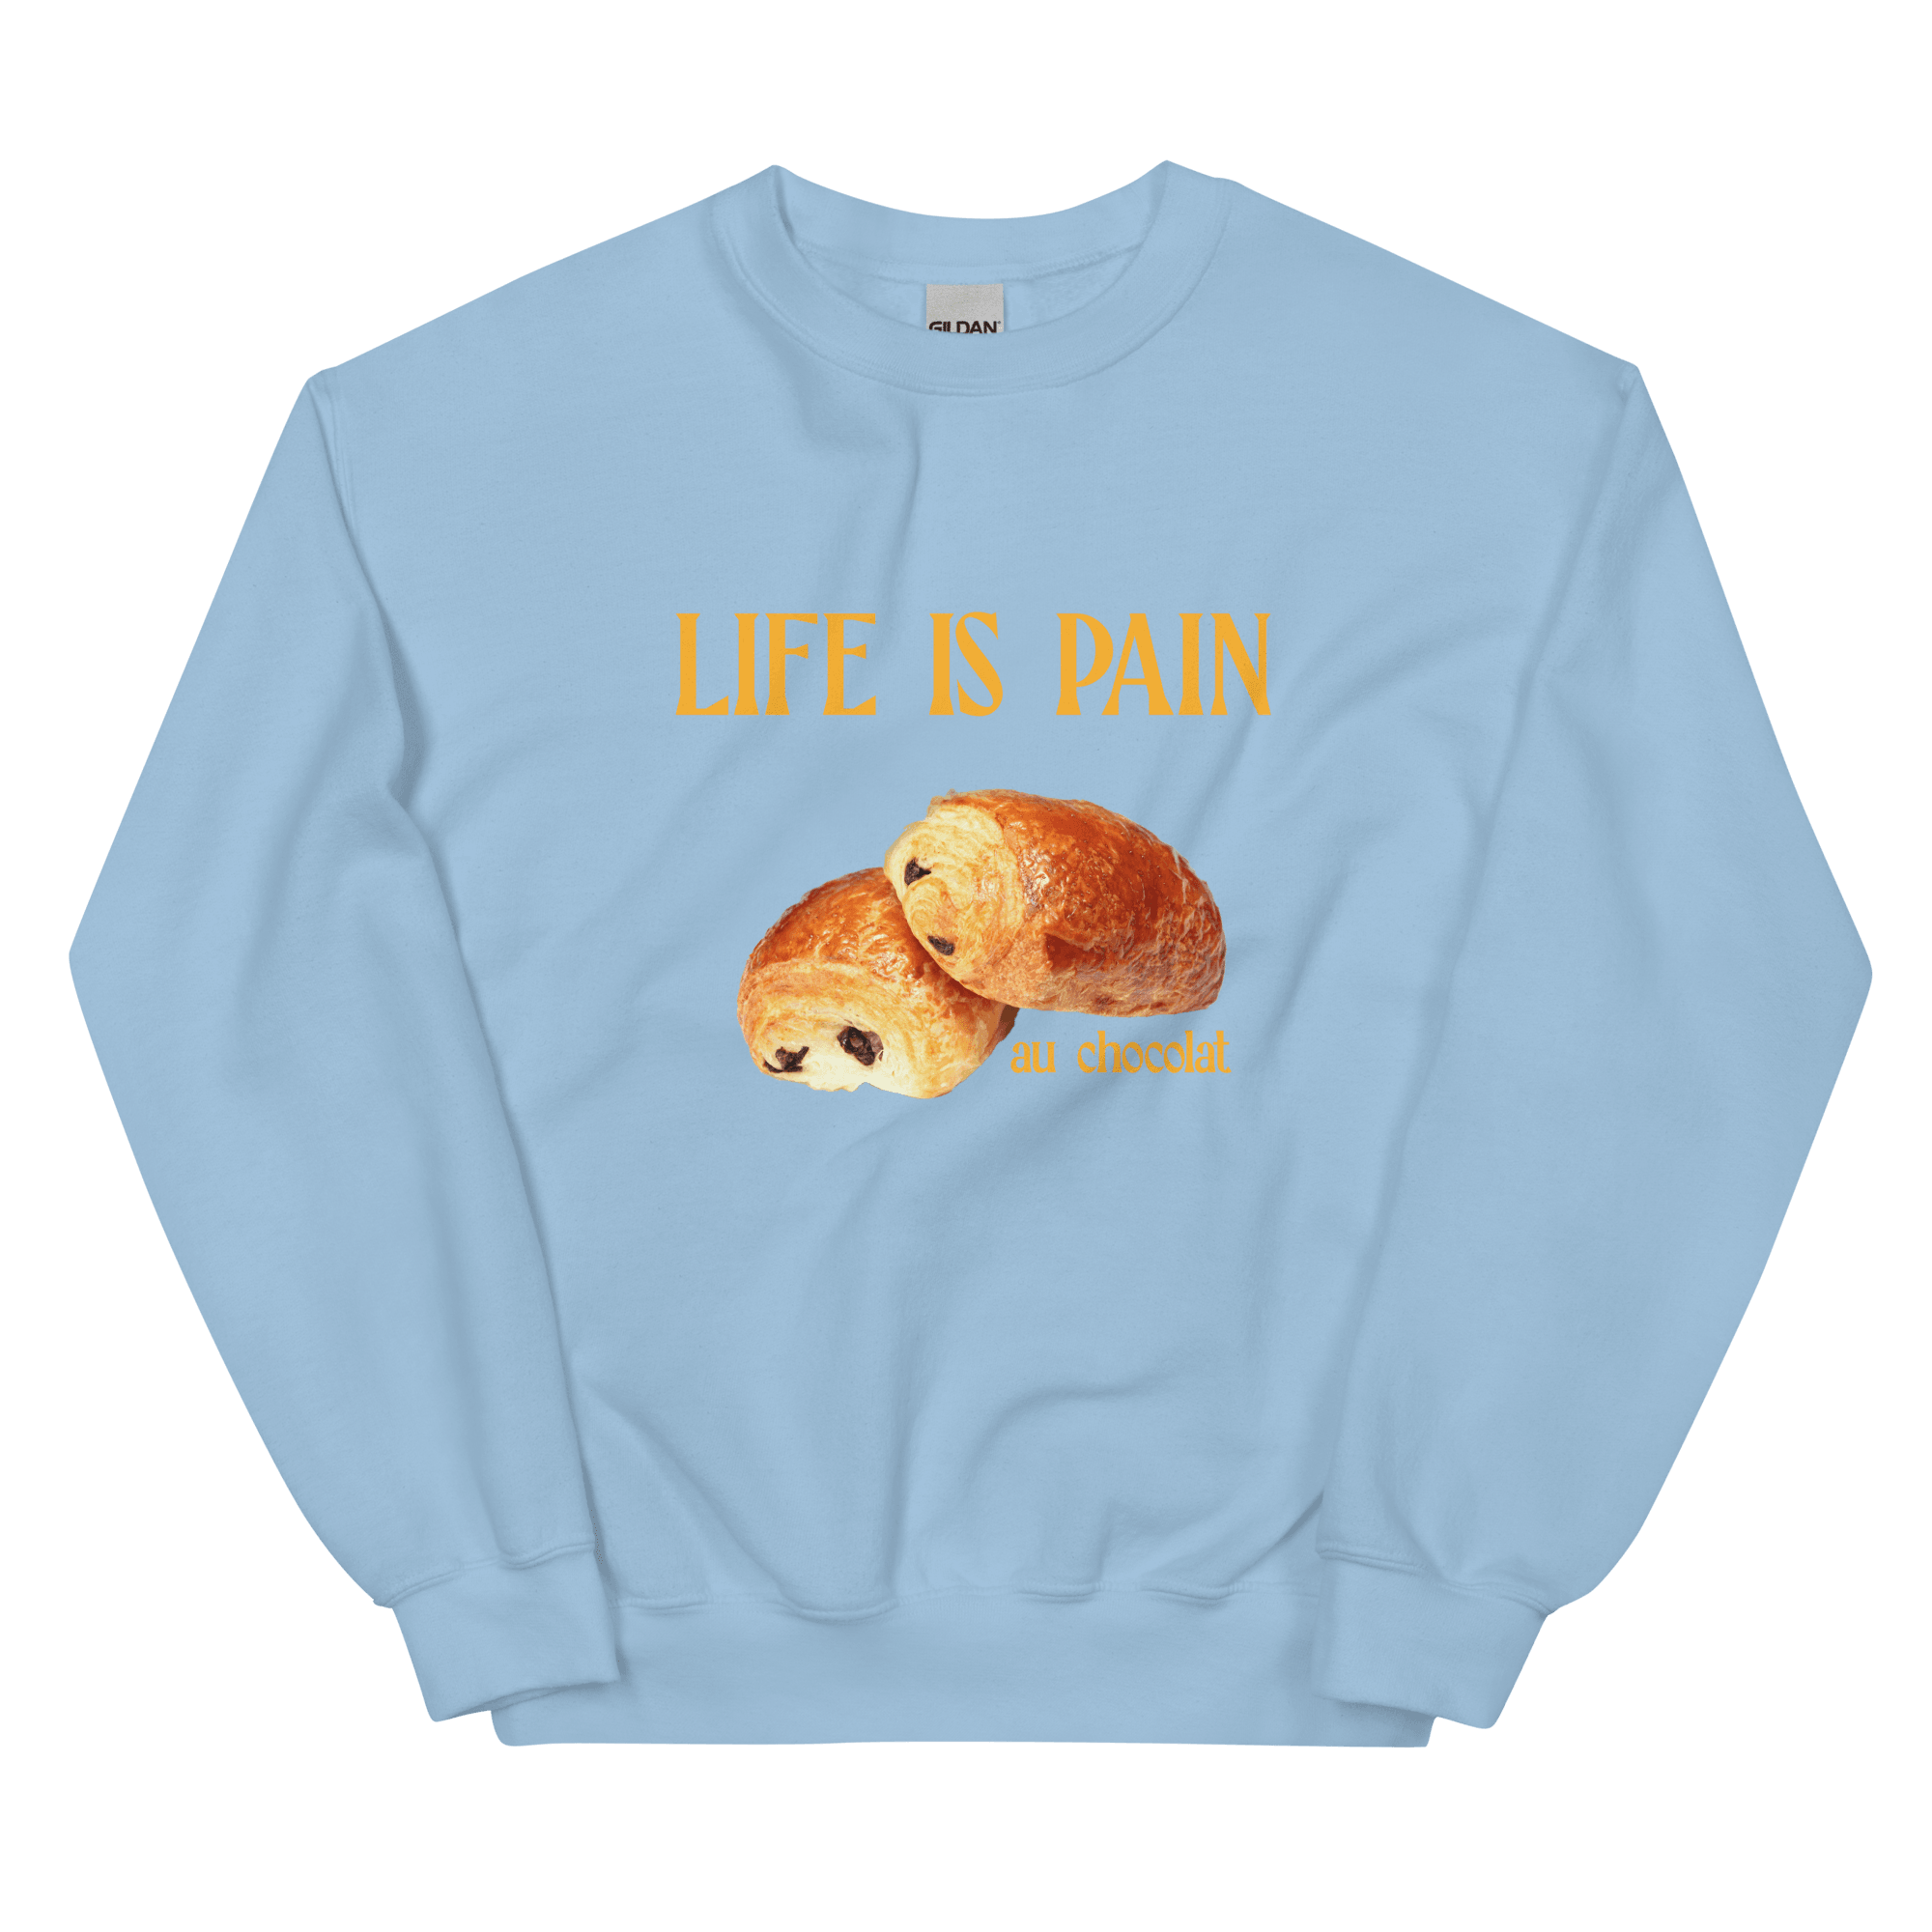 Life is Pain (au chocolat) Sweatshirt - Polychrome Goods 🍊